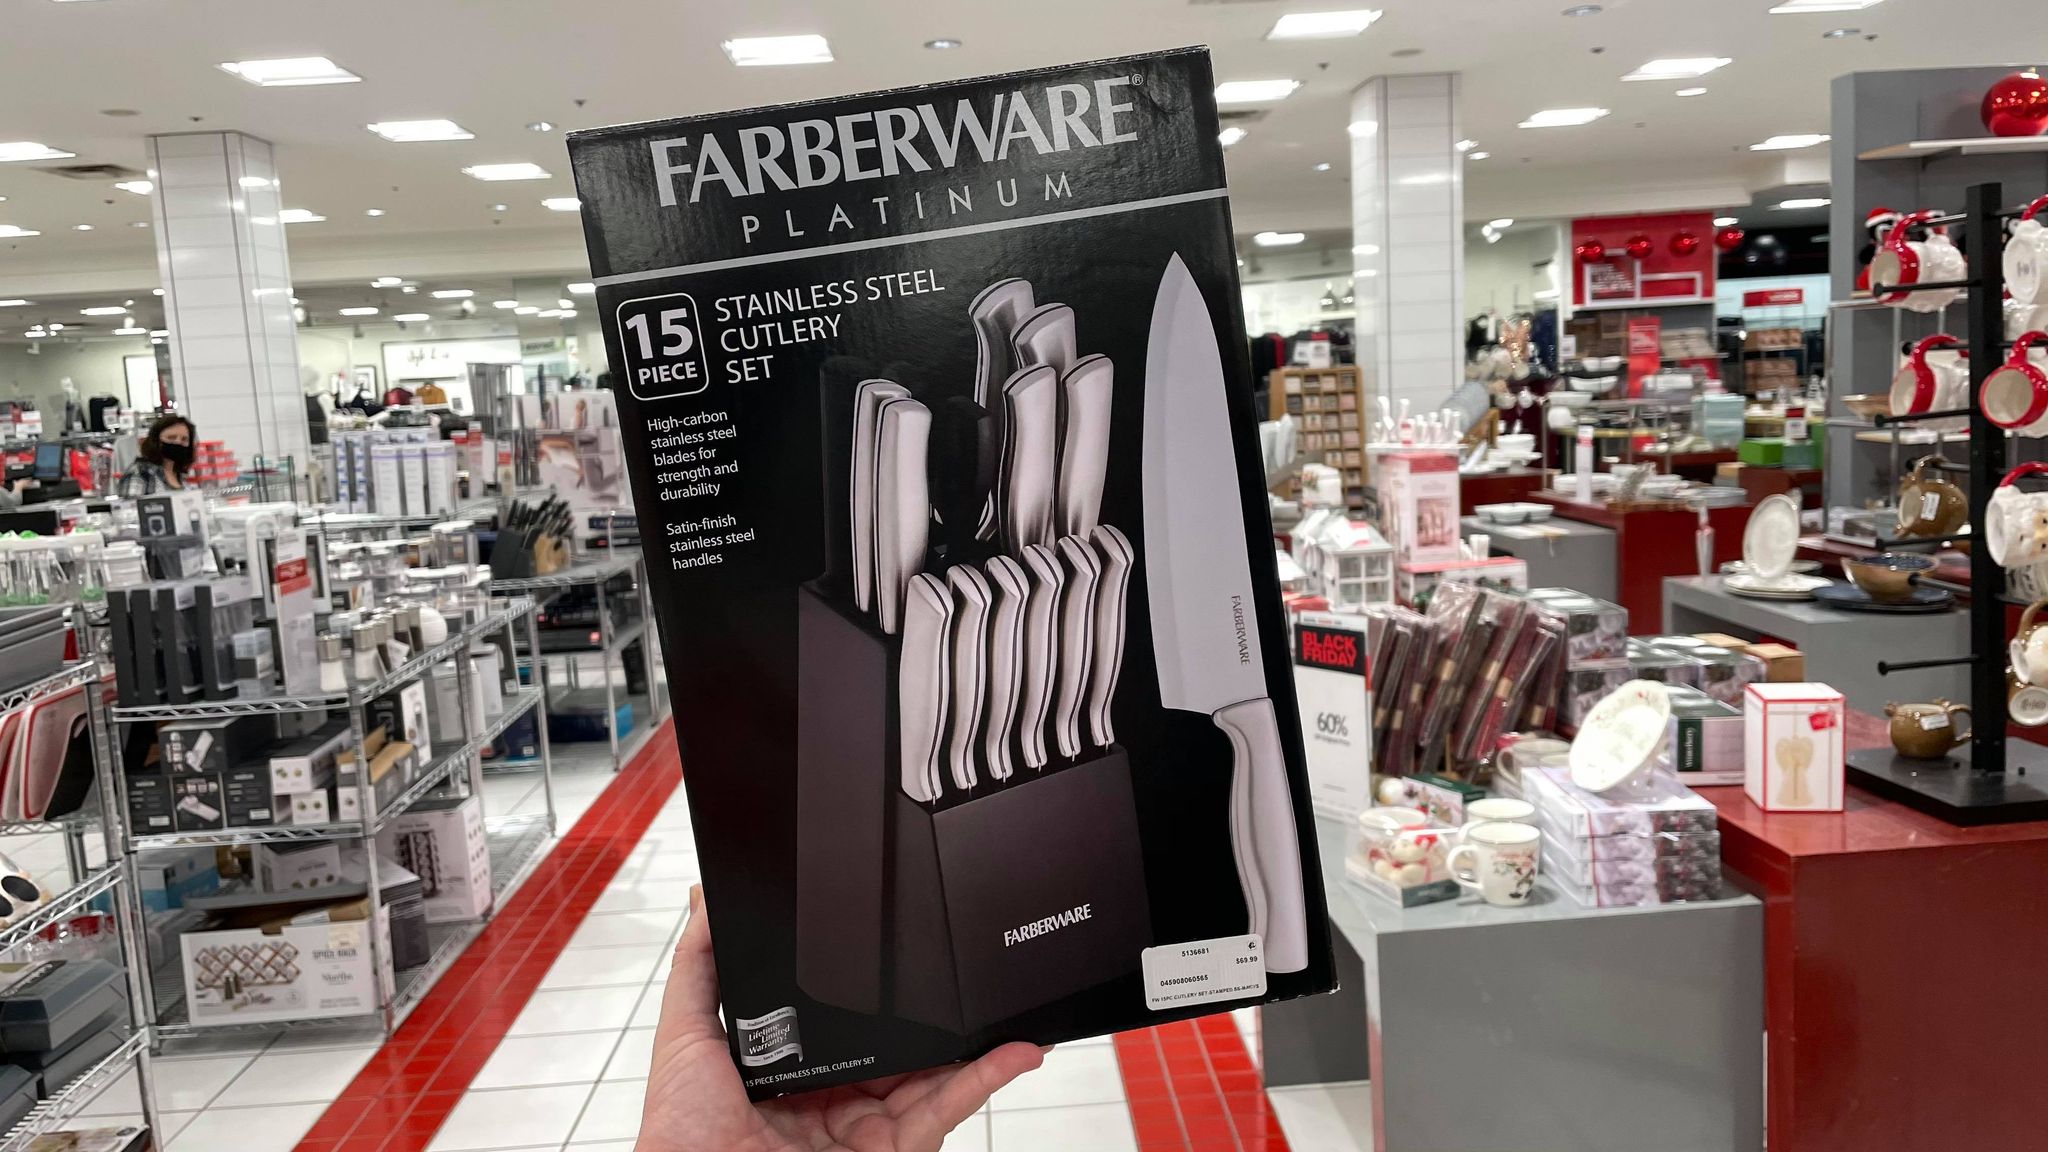 Farberware Platinum Cutlery Set, Stainless Steel, 15 Piece